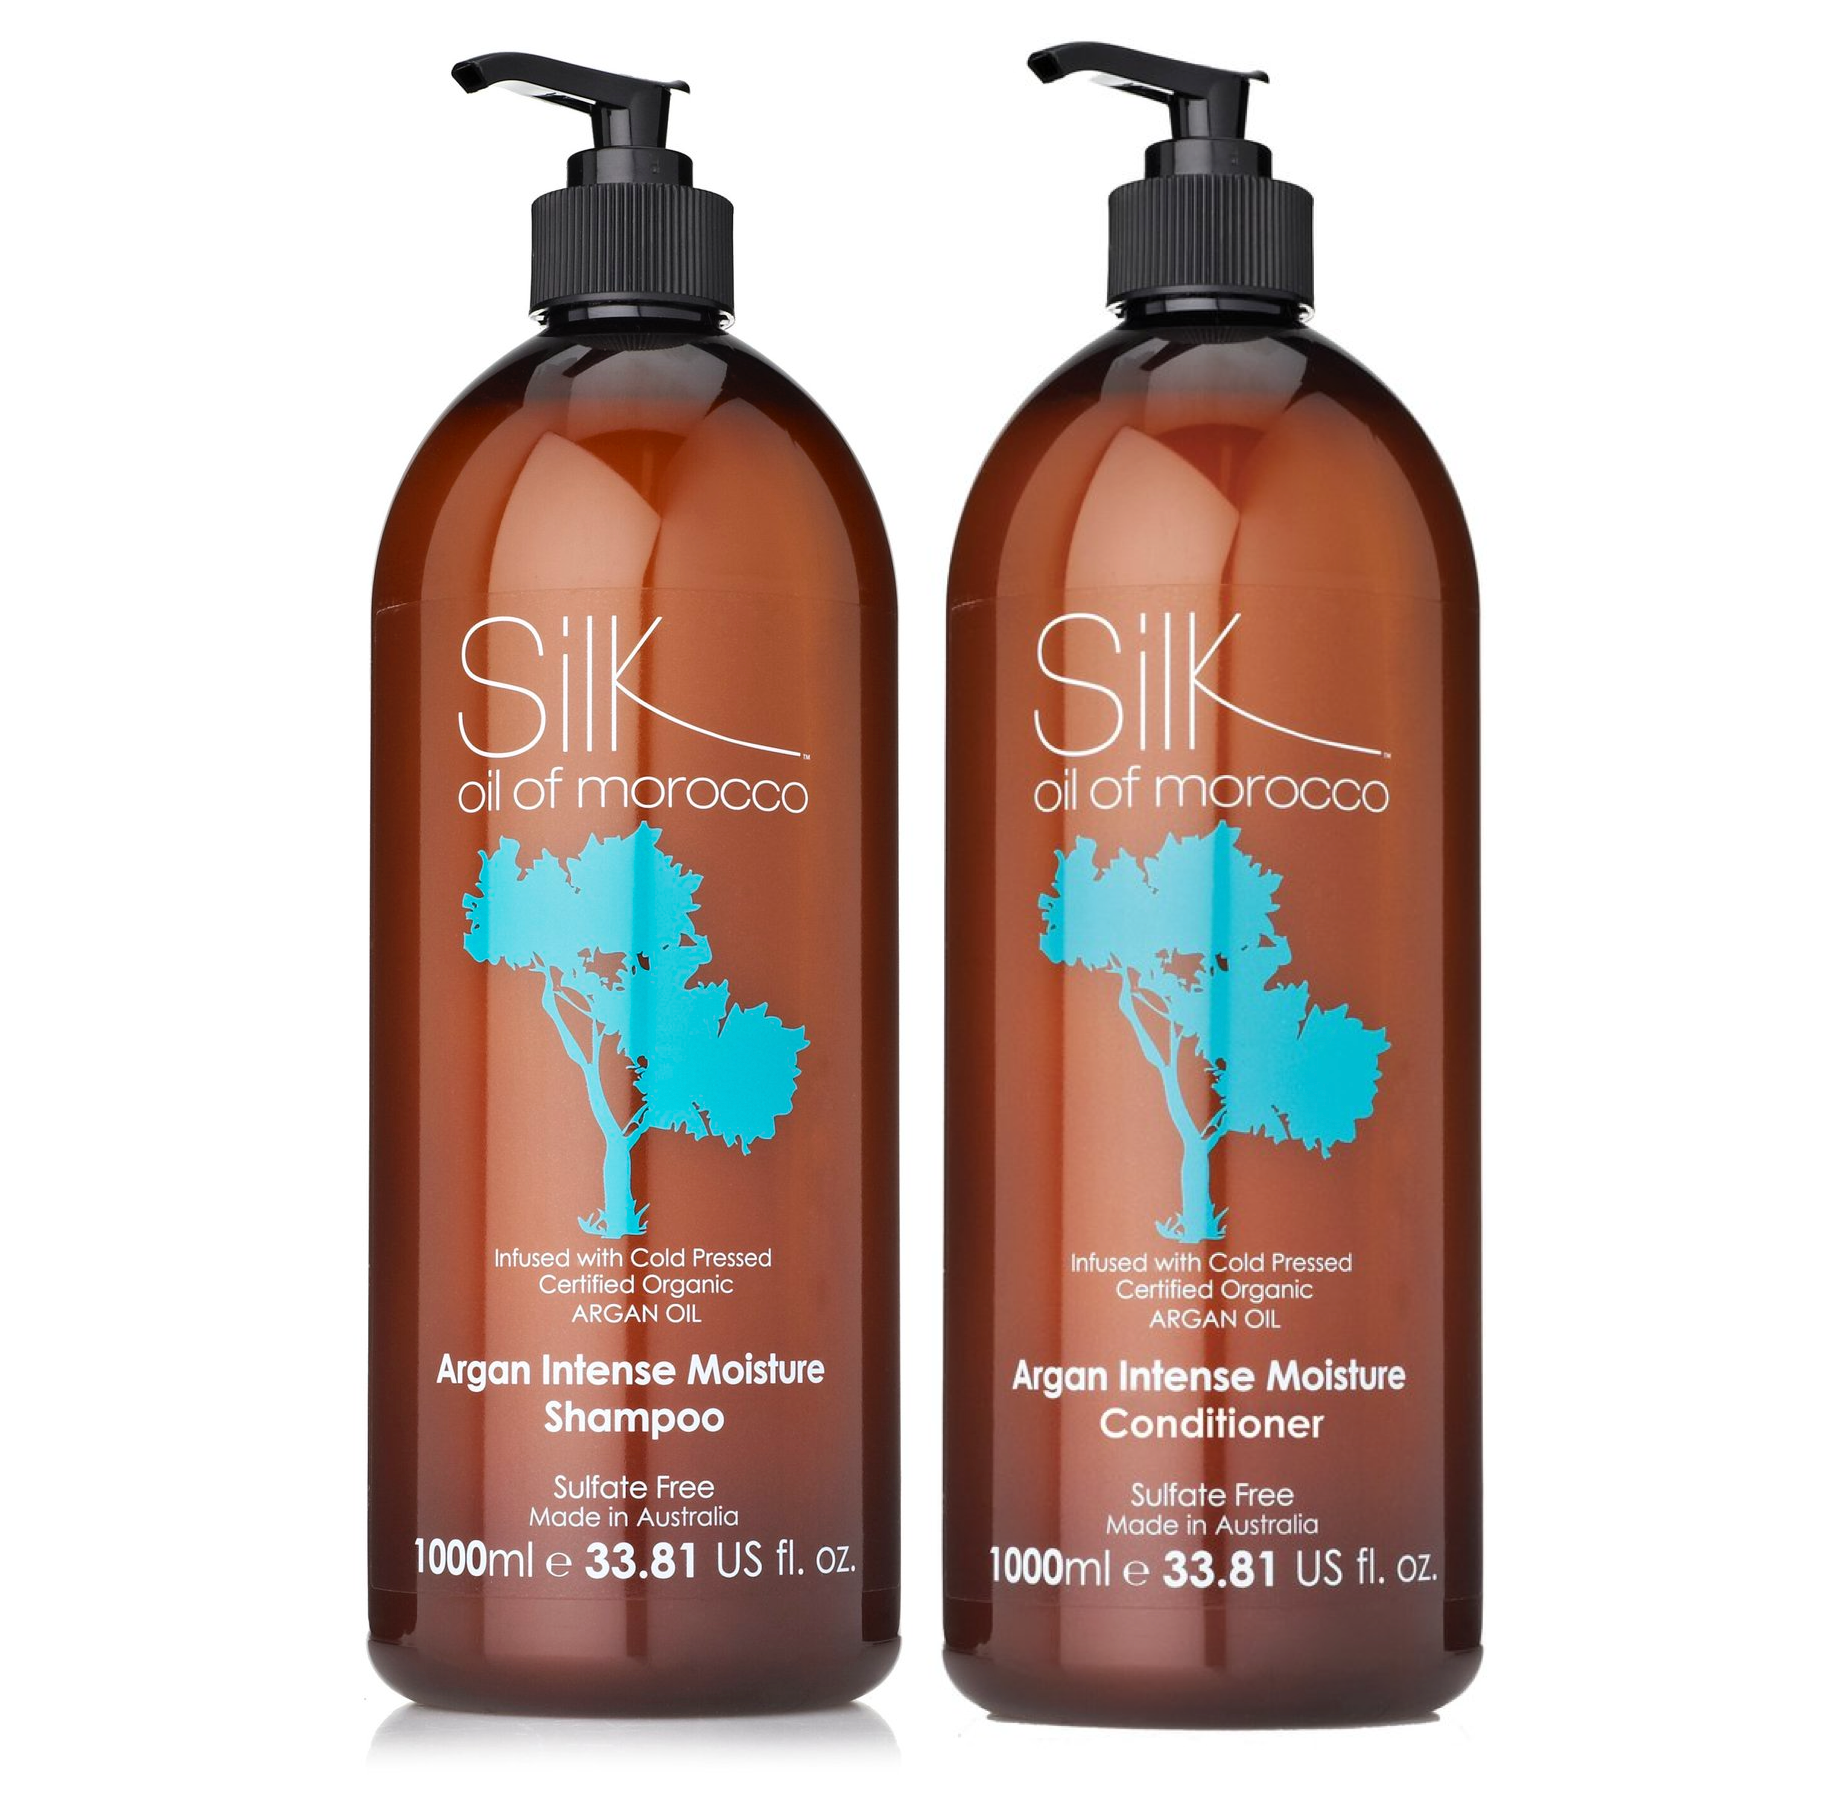 Silk Oil of Morocco Argan Intense Moisture Shampoo and Conditioner 1000ml